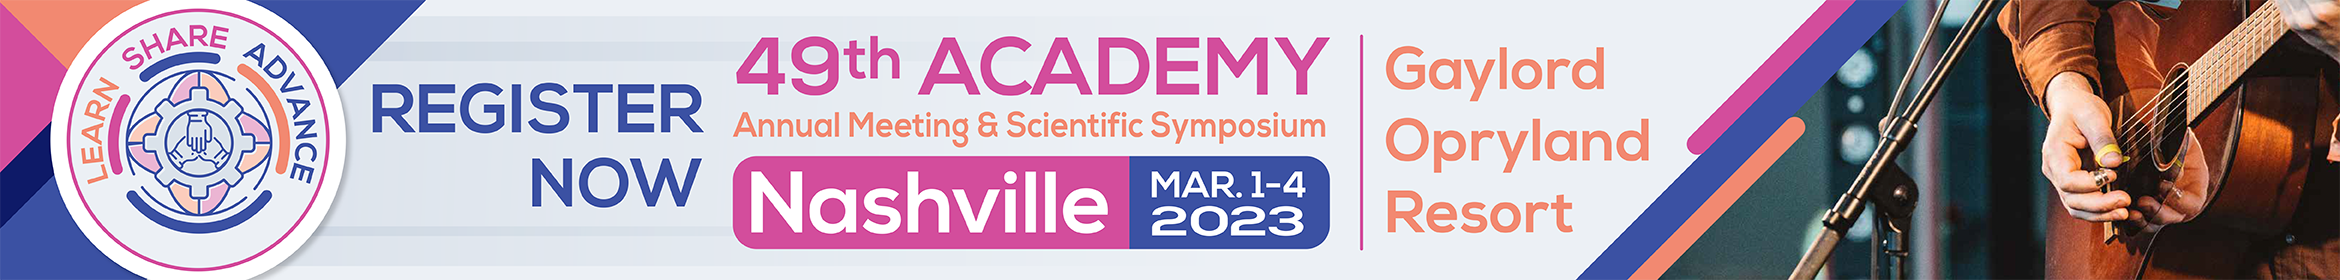 49th Academy Annual Meeting & Scientific Symposium Main banner